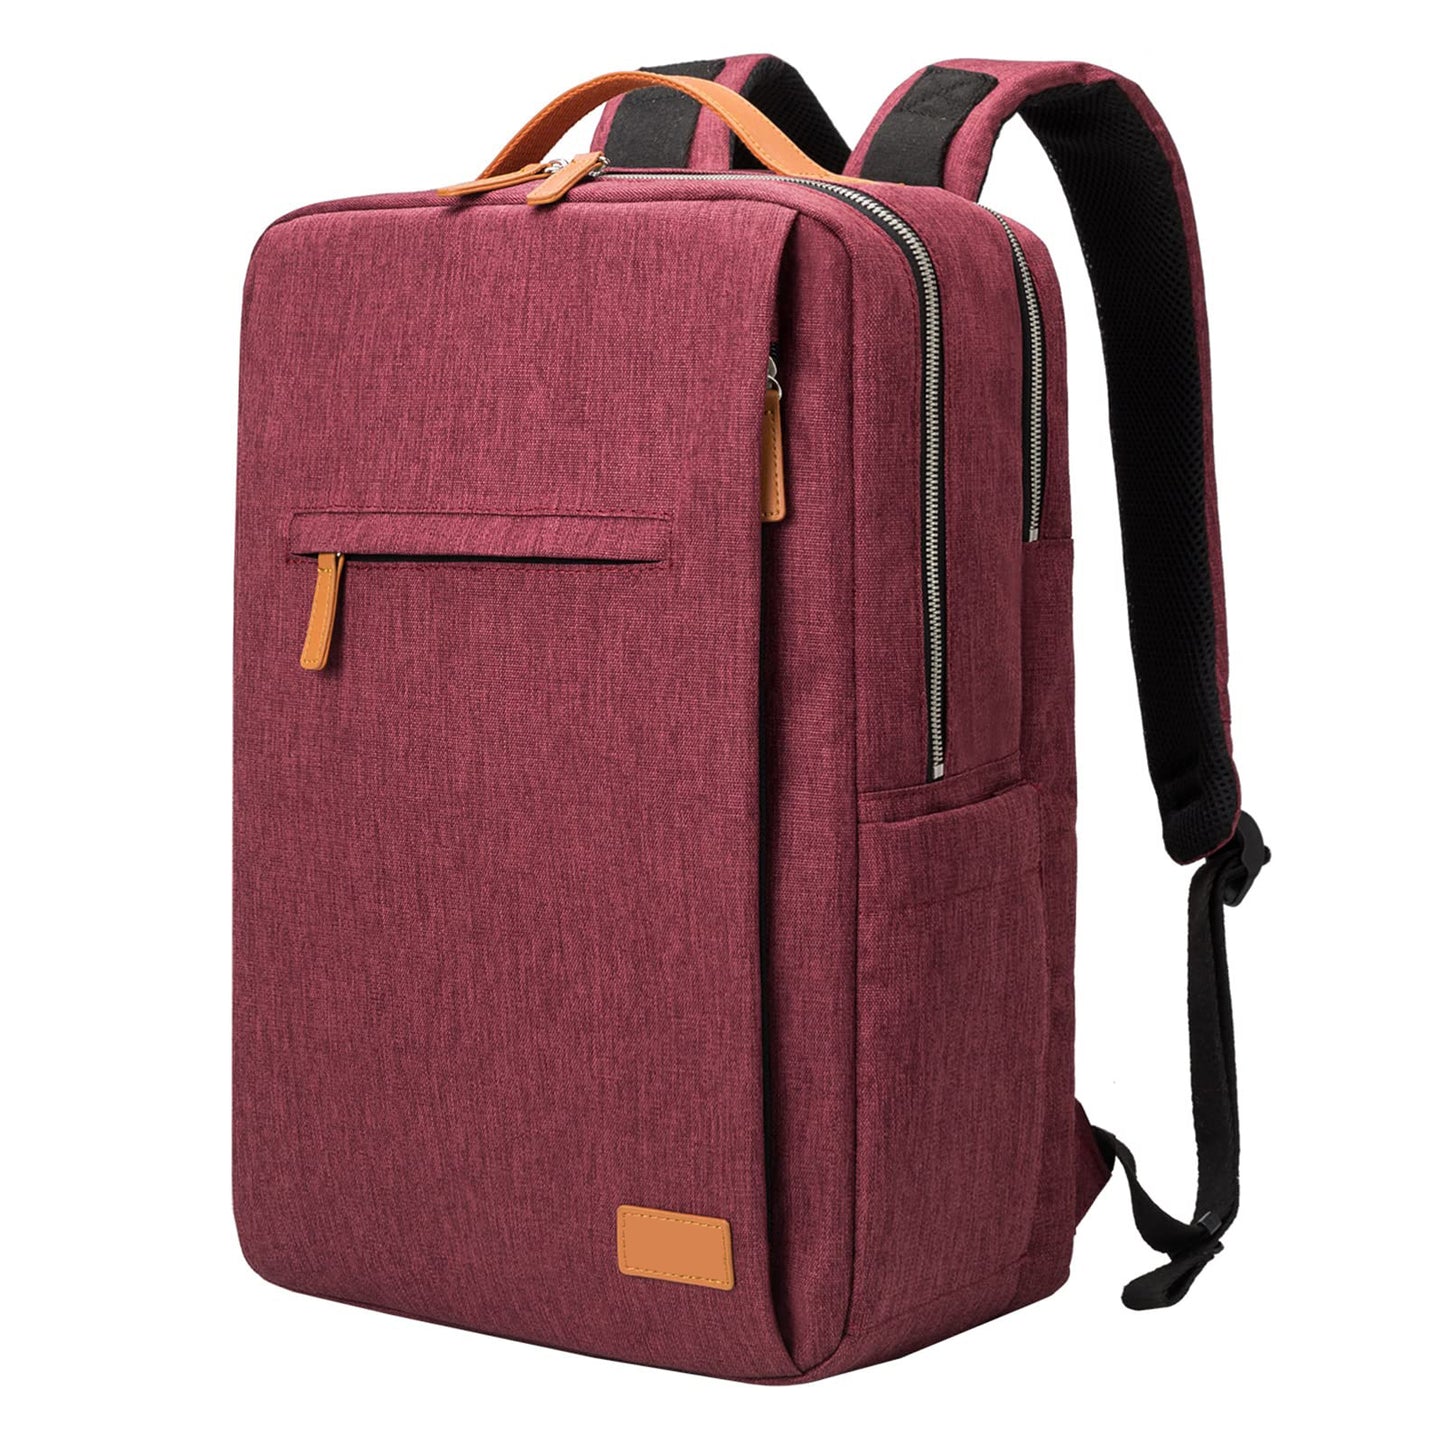 Smart USB School Travel Backpack